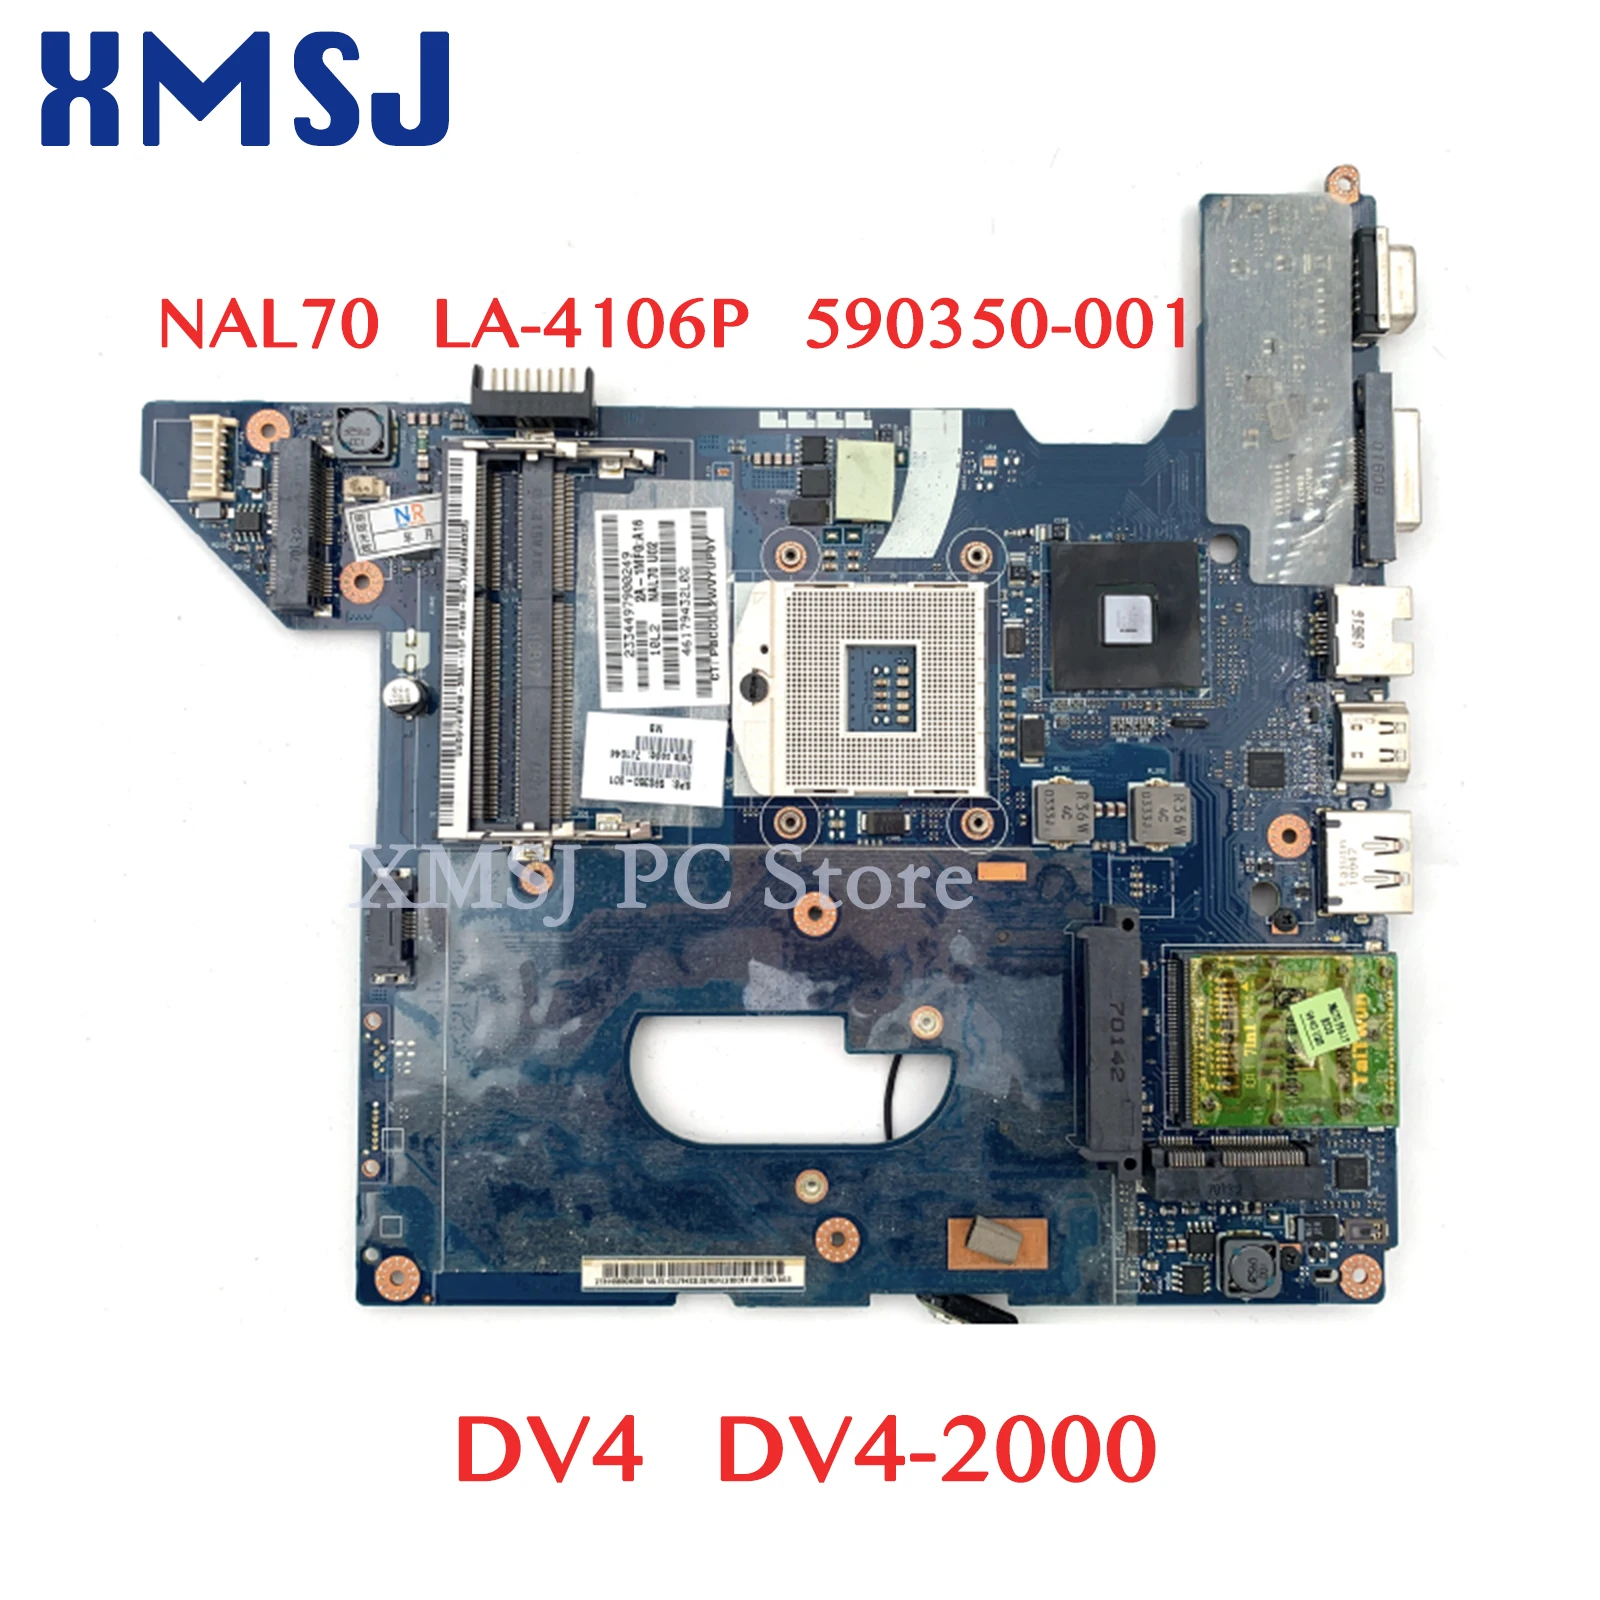 

XMSJ For HP Pavilion DV4 DV4-2000 NAL70 LA-4106P 590350-001 Laptop Motherboard HM55 UMA HD DDR3 Free CPU Fully Tested